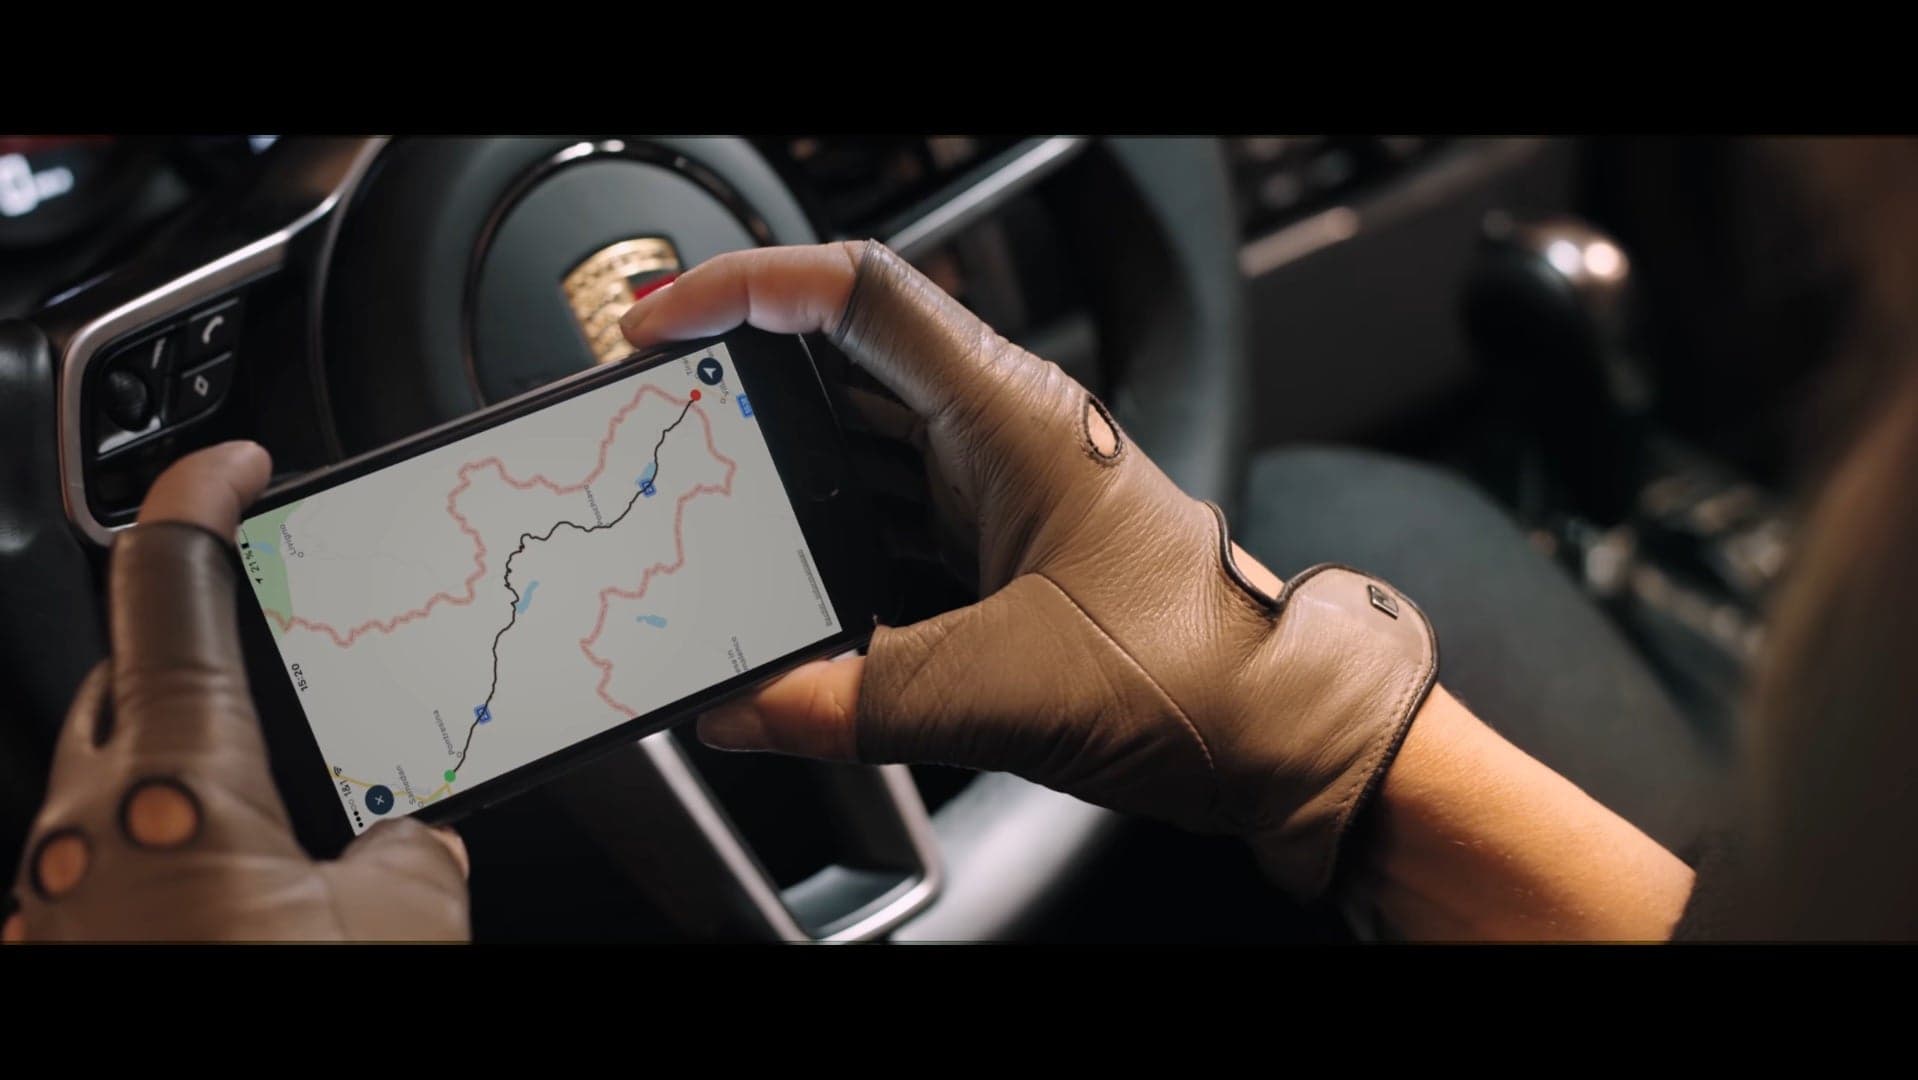 Porsche’s New Video Series Tracks Down The World’s Most Beautiful Roads